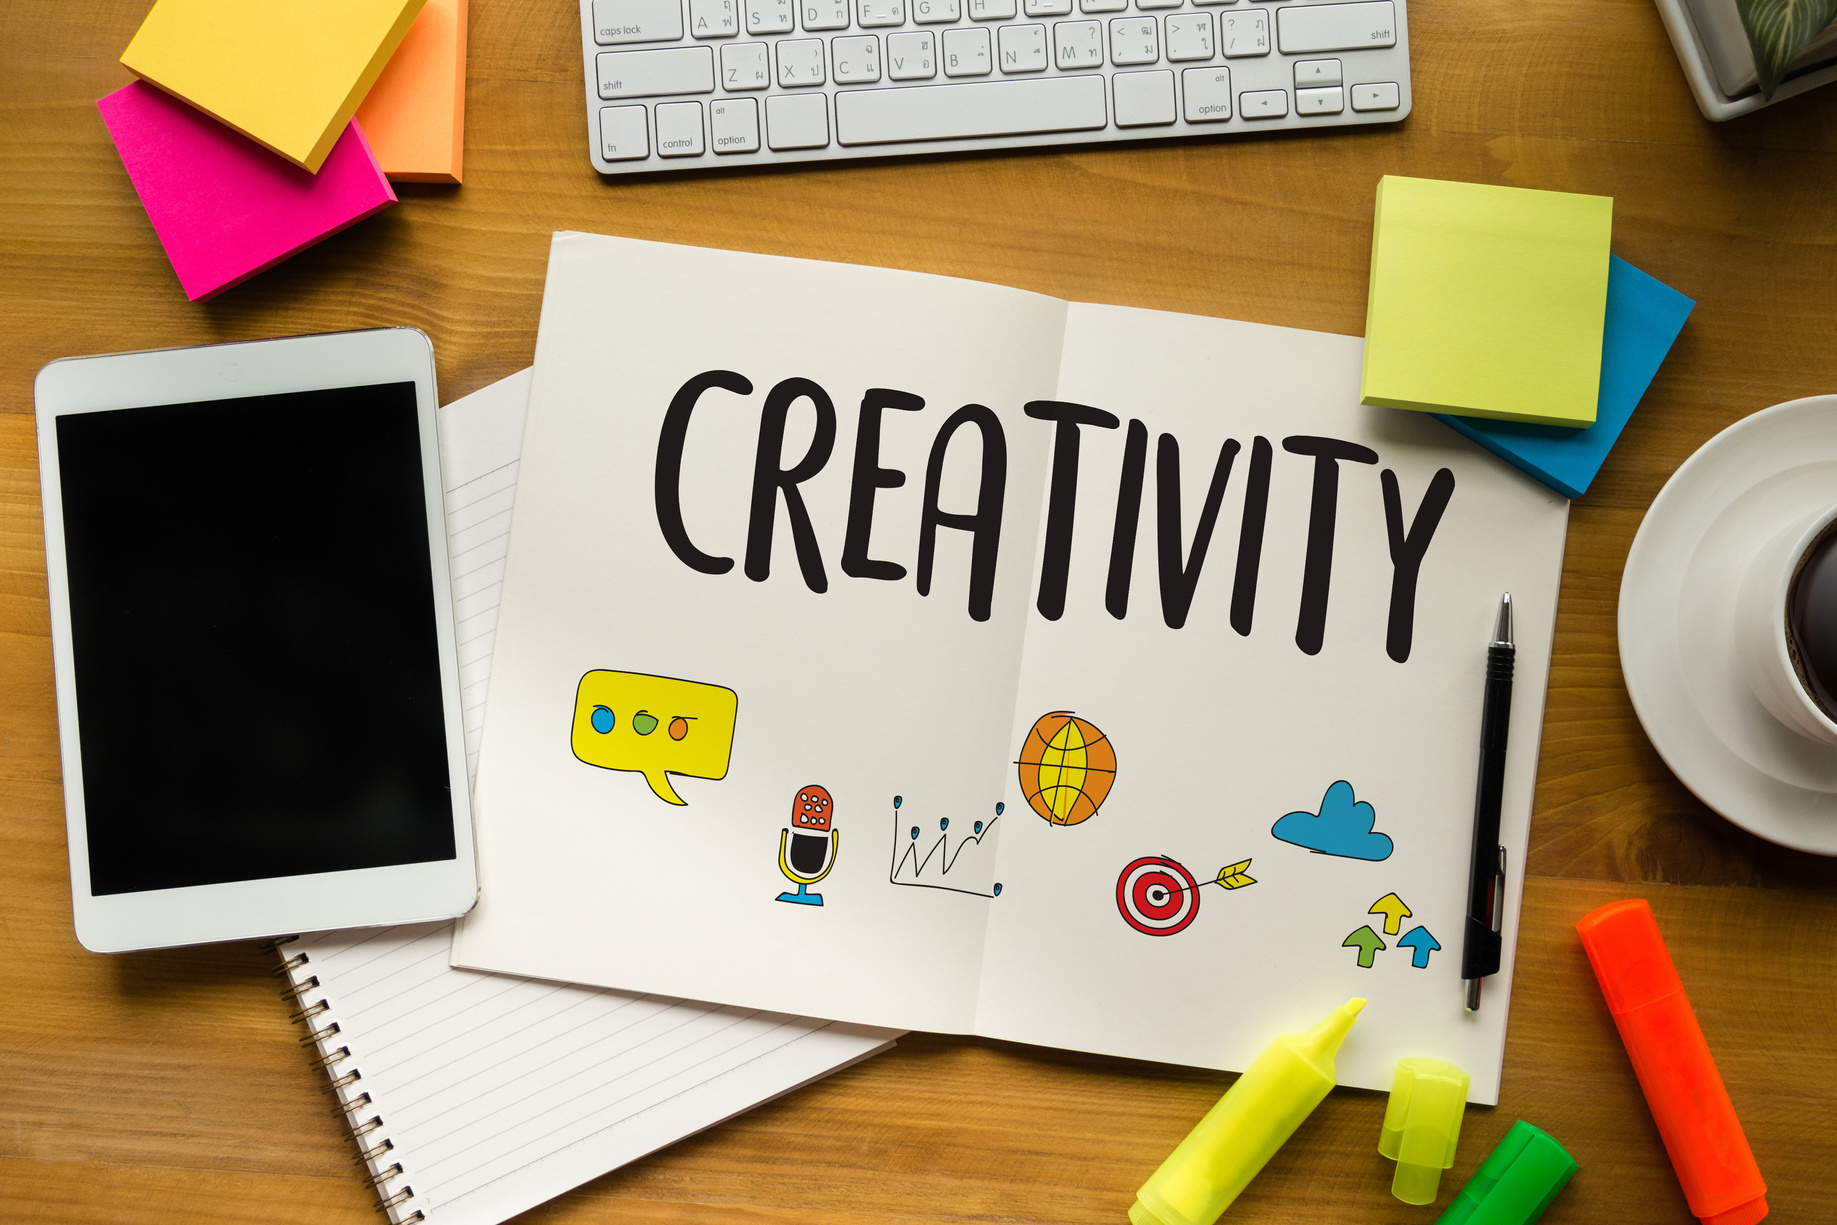 CREATIVITY Creative and Design Thinking Innovation Process and inspiration, idea and imagination , Design Studio